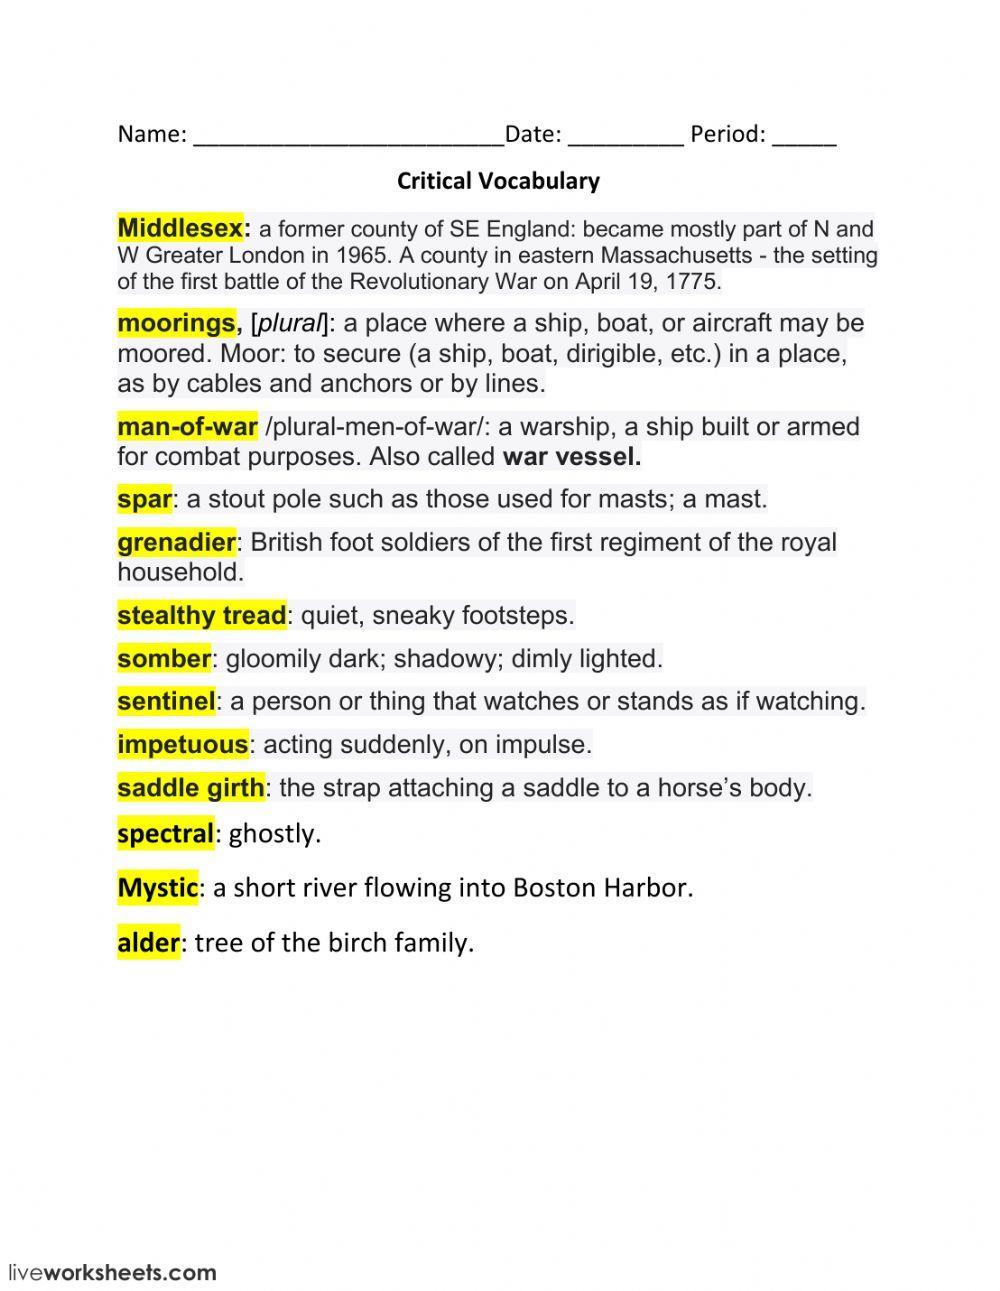 Critical Vocabulary - Paul Revere's Ride